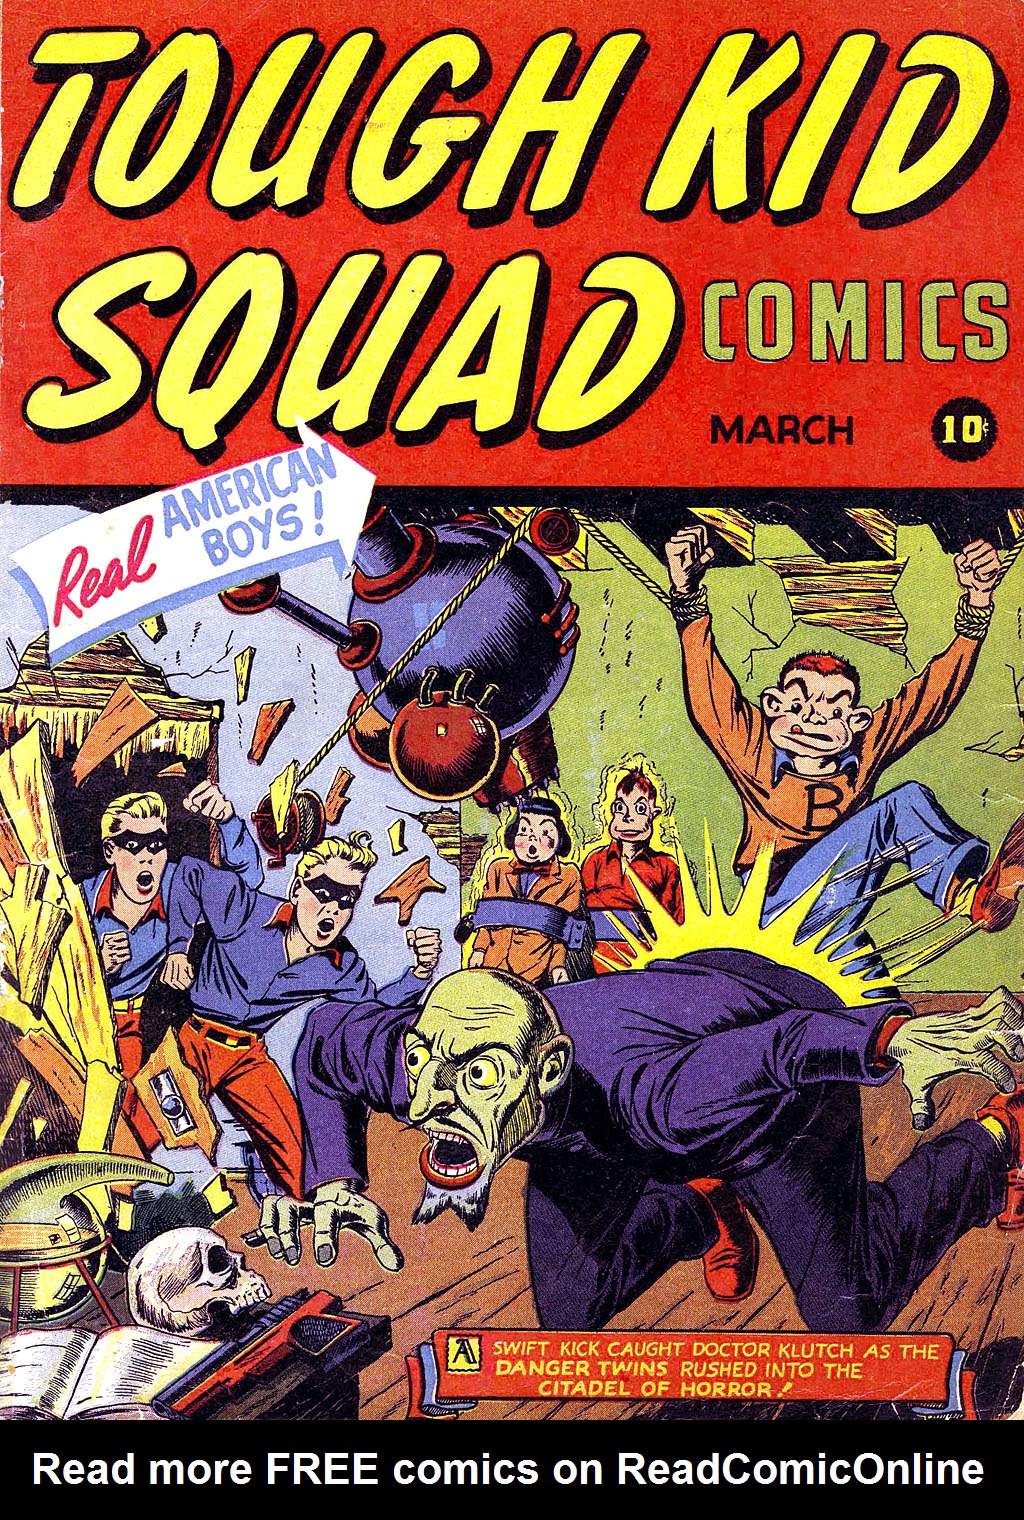 Read online Tough Kid Squad Comics comic -  Issue # Full - 1